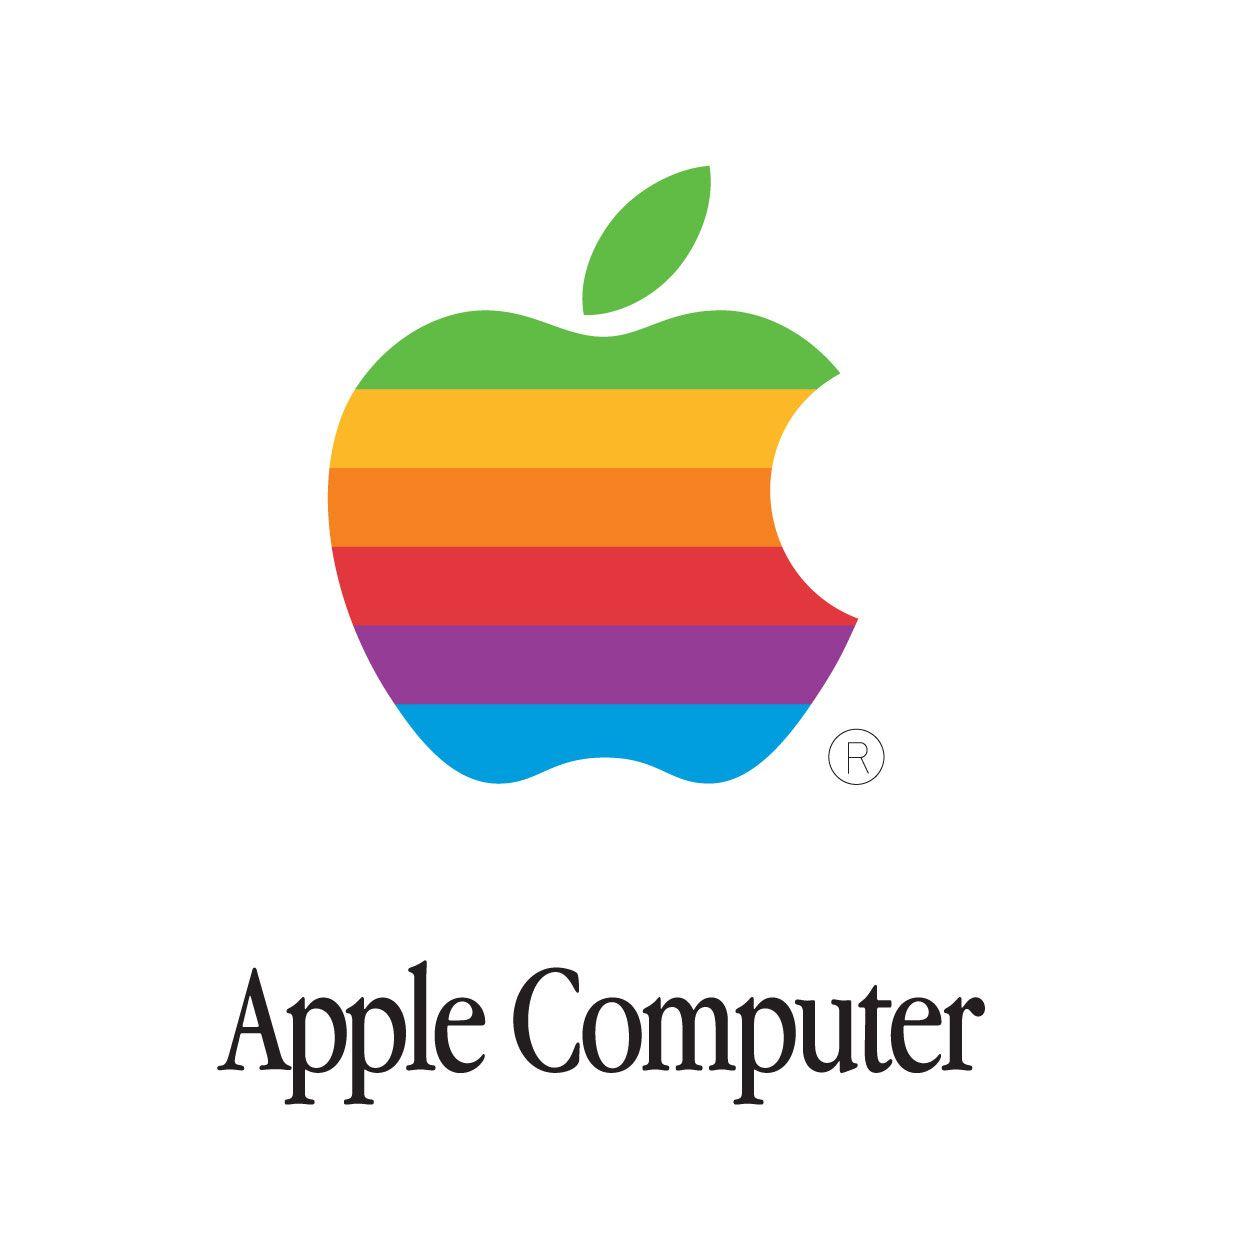 Apple Old Logo - Old-Apple-Computer-Logo - The Technology Geek